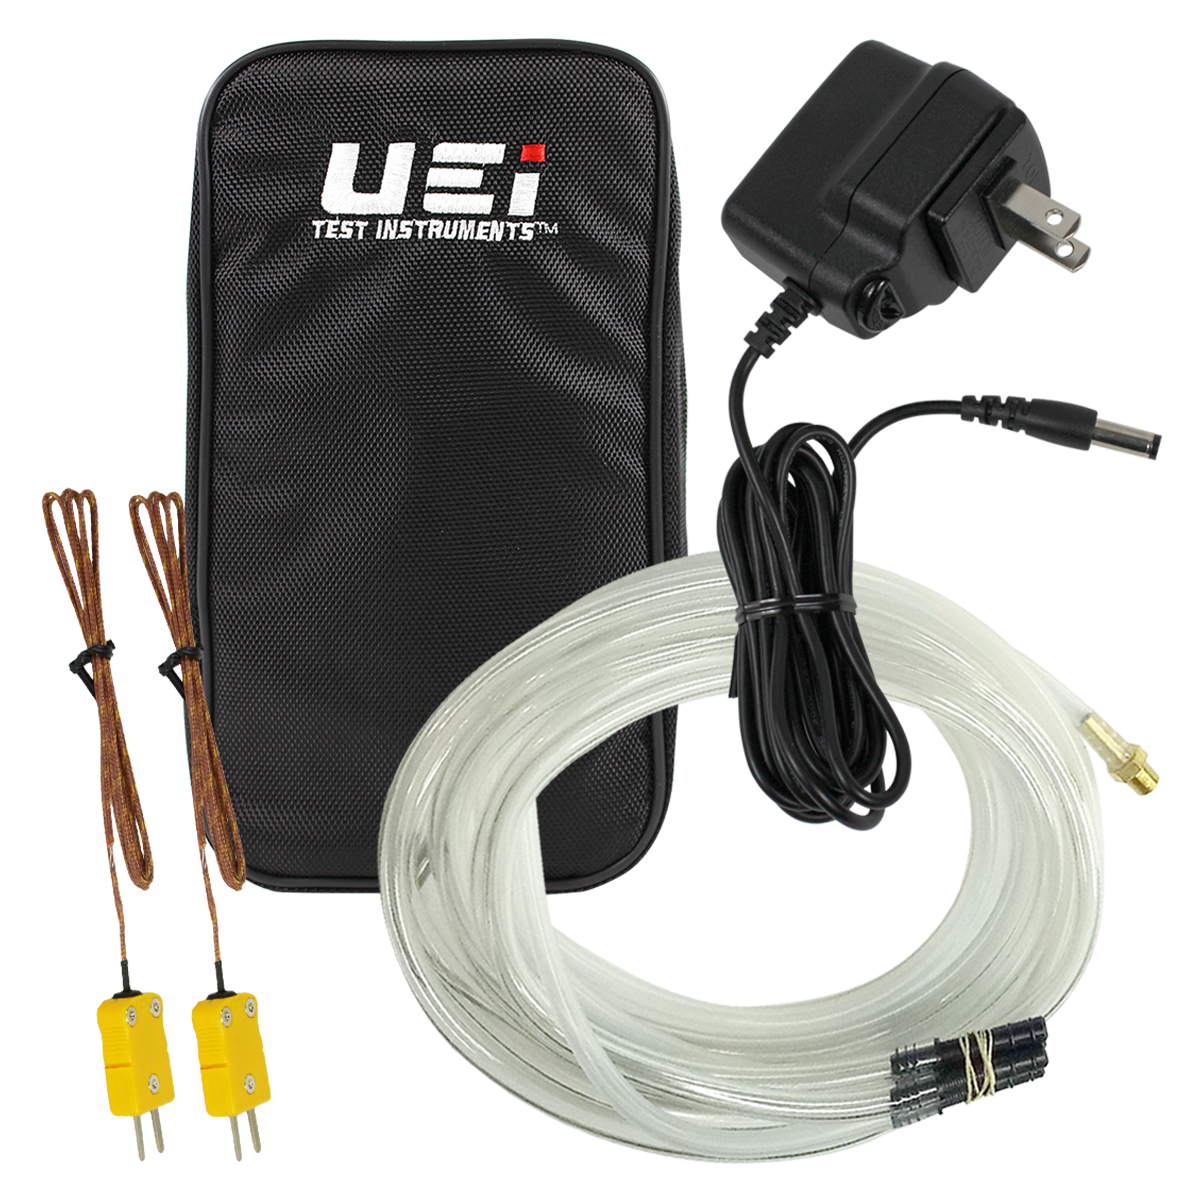 UEi KANE 522KIT Oil Burner & Boiler Install Kit with C161 Combustion  Analyzer, Clamp Meter, Manometer, Leak Detector, Thermometer, and Smoke  Test Kit